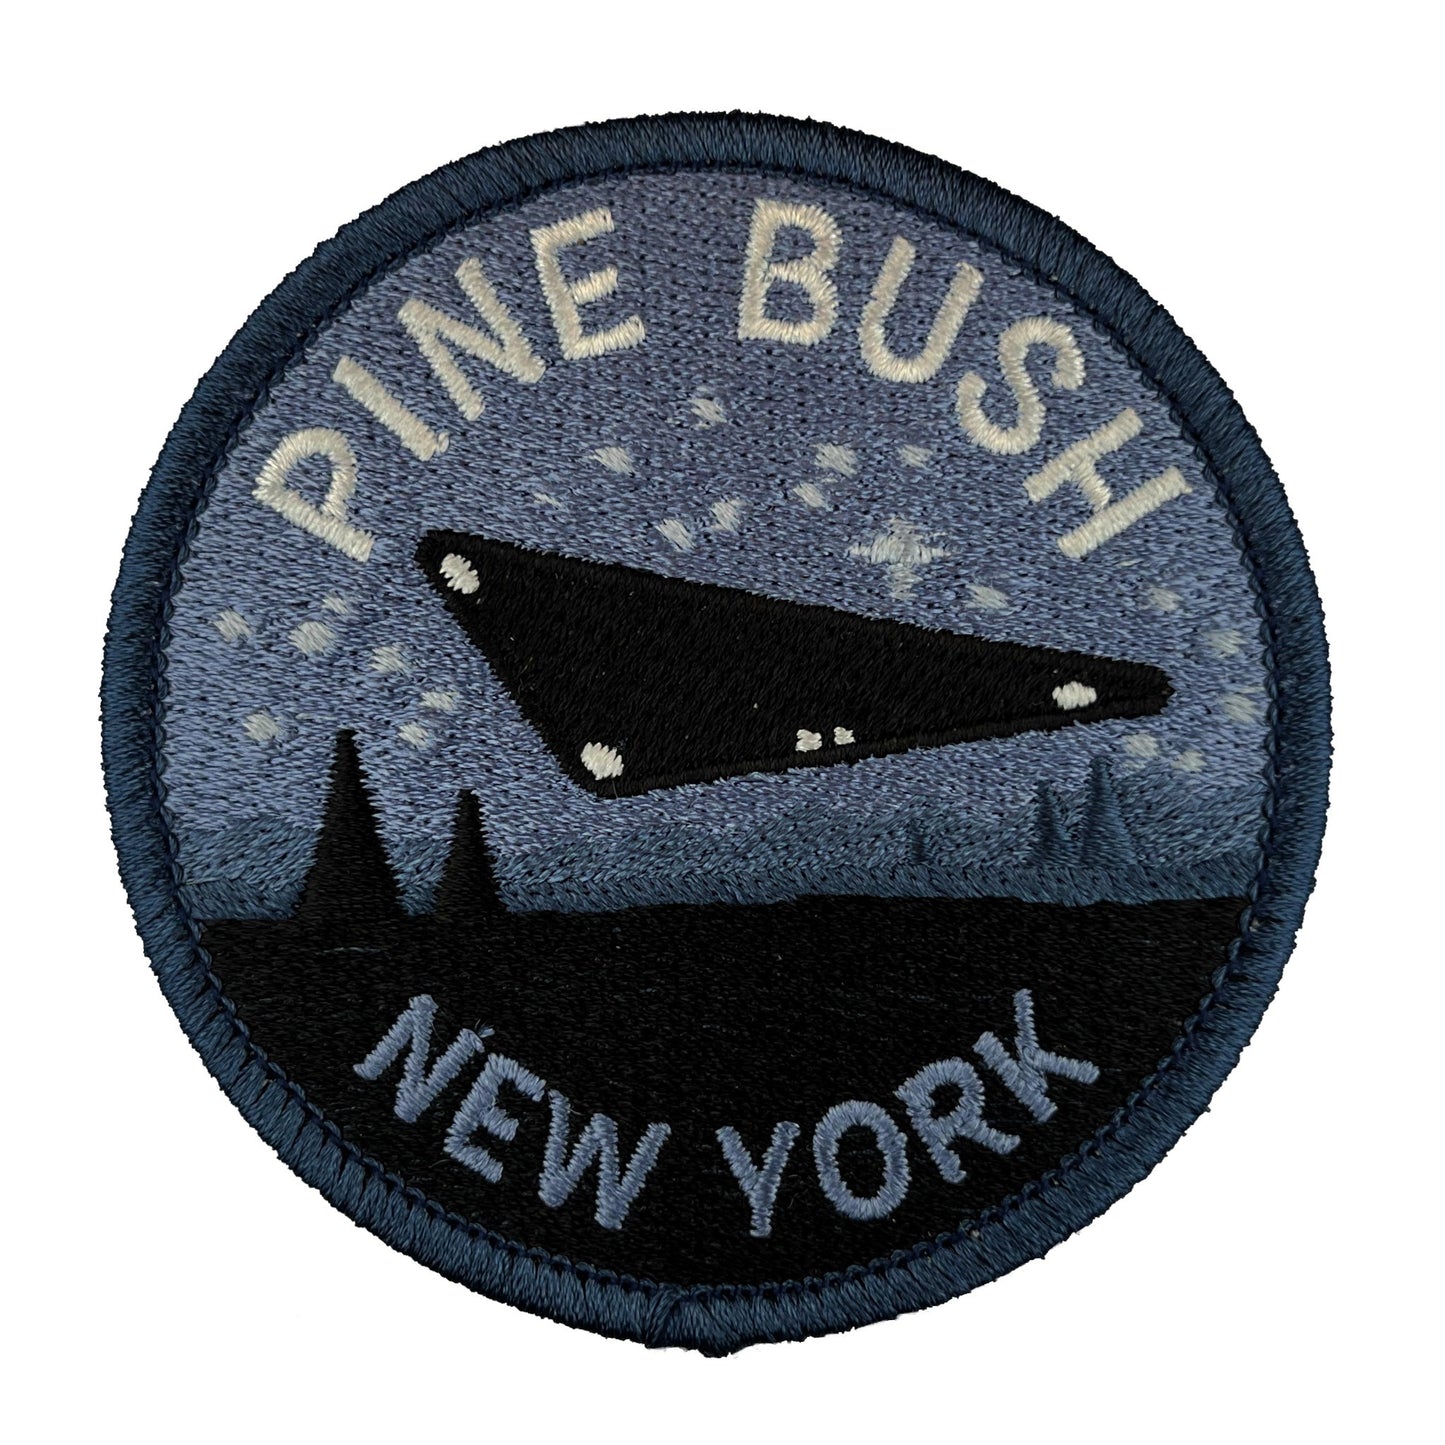 Pine Bush, New York Travel Patch